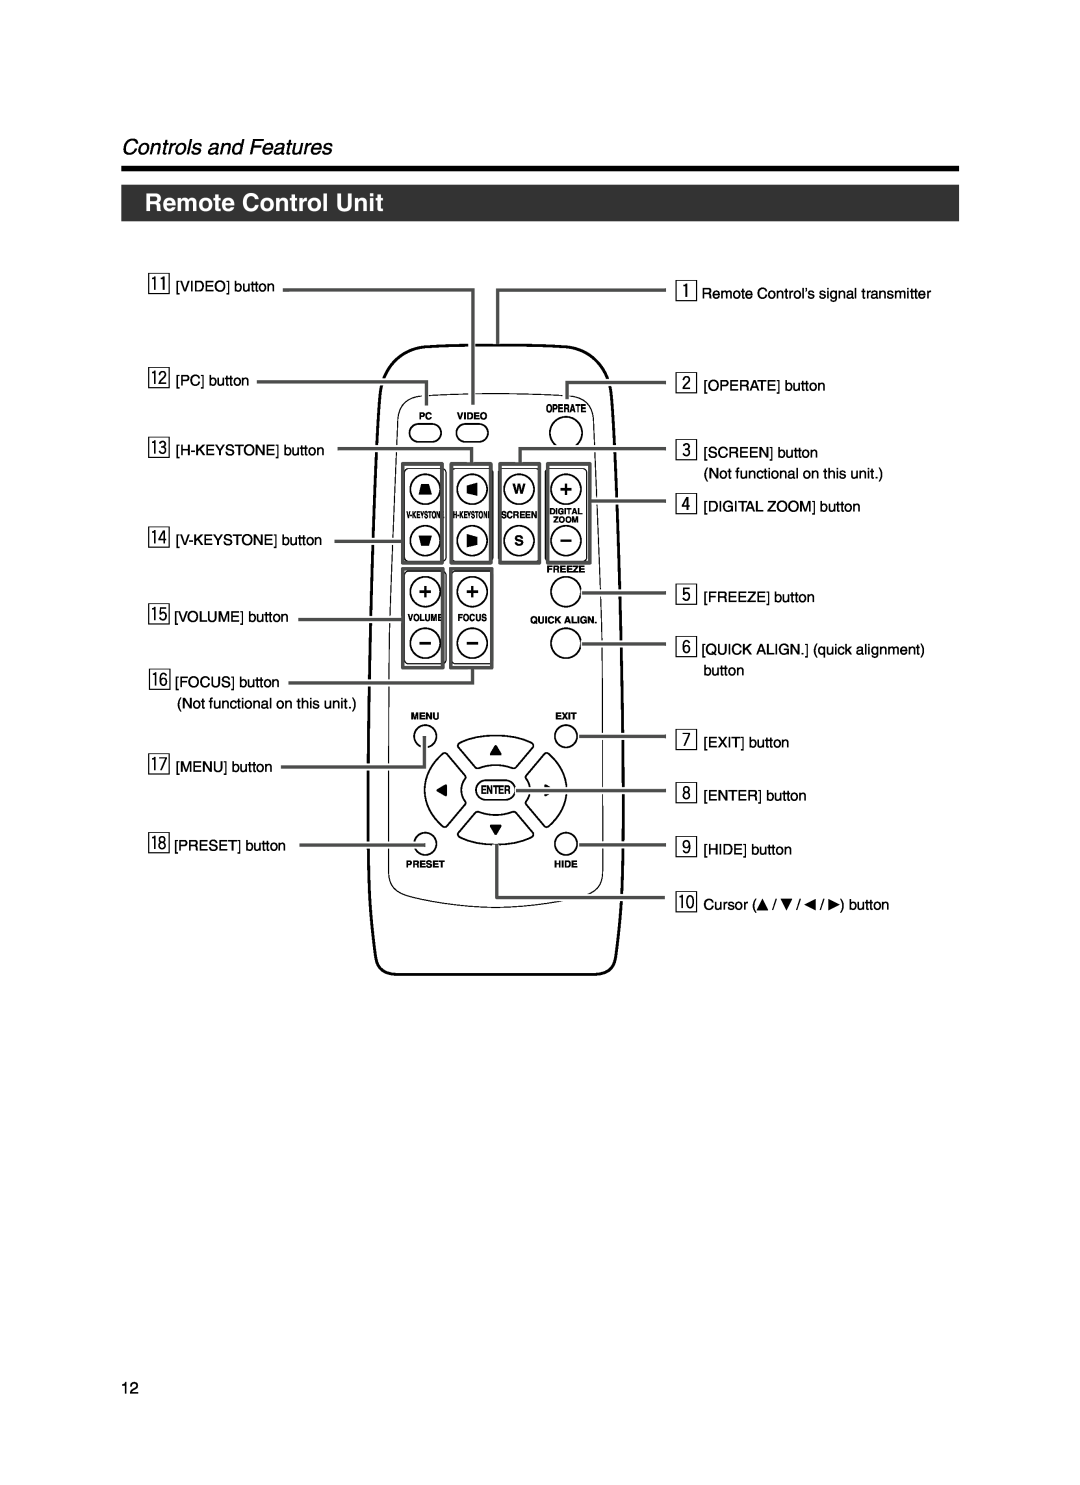 JVC Model DLA-HX1E manual Remote Control Unit, Controls and Features, t VOLUME button 